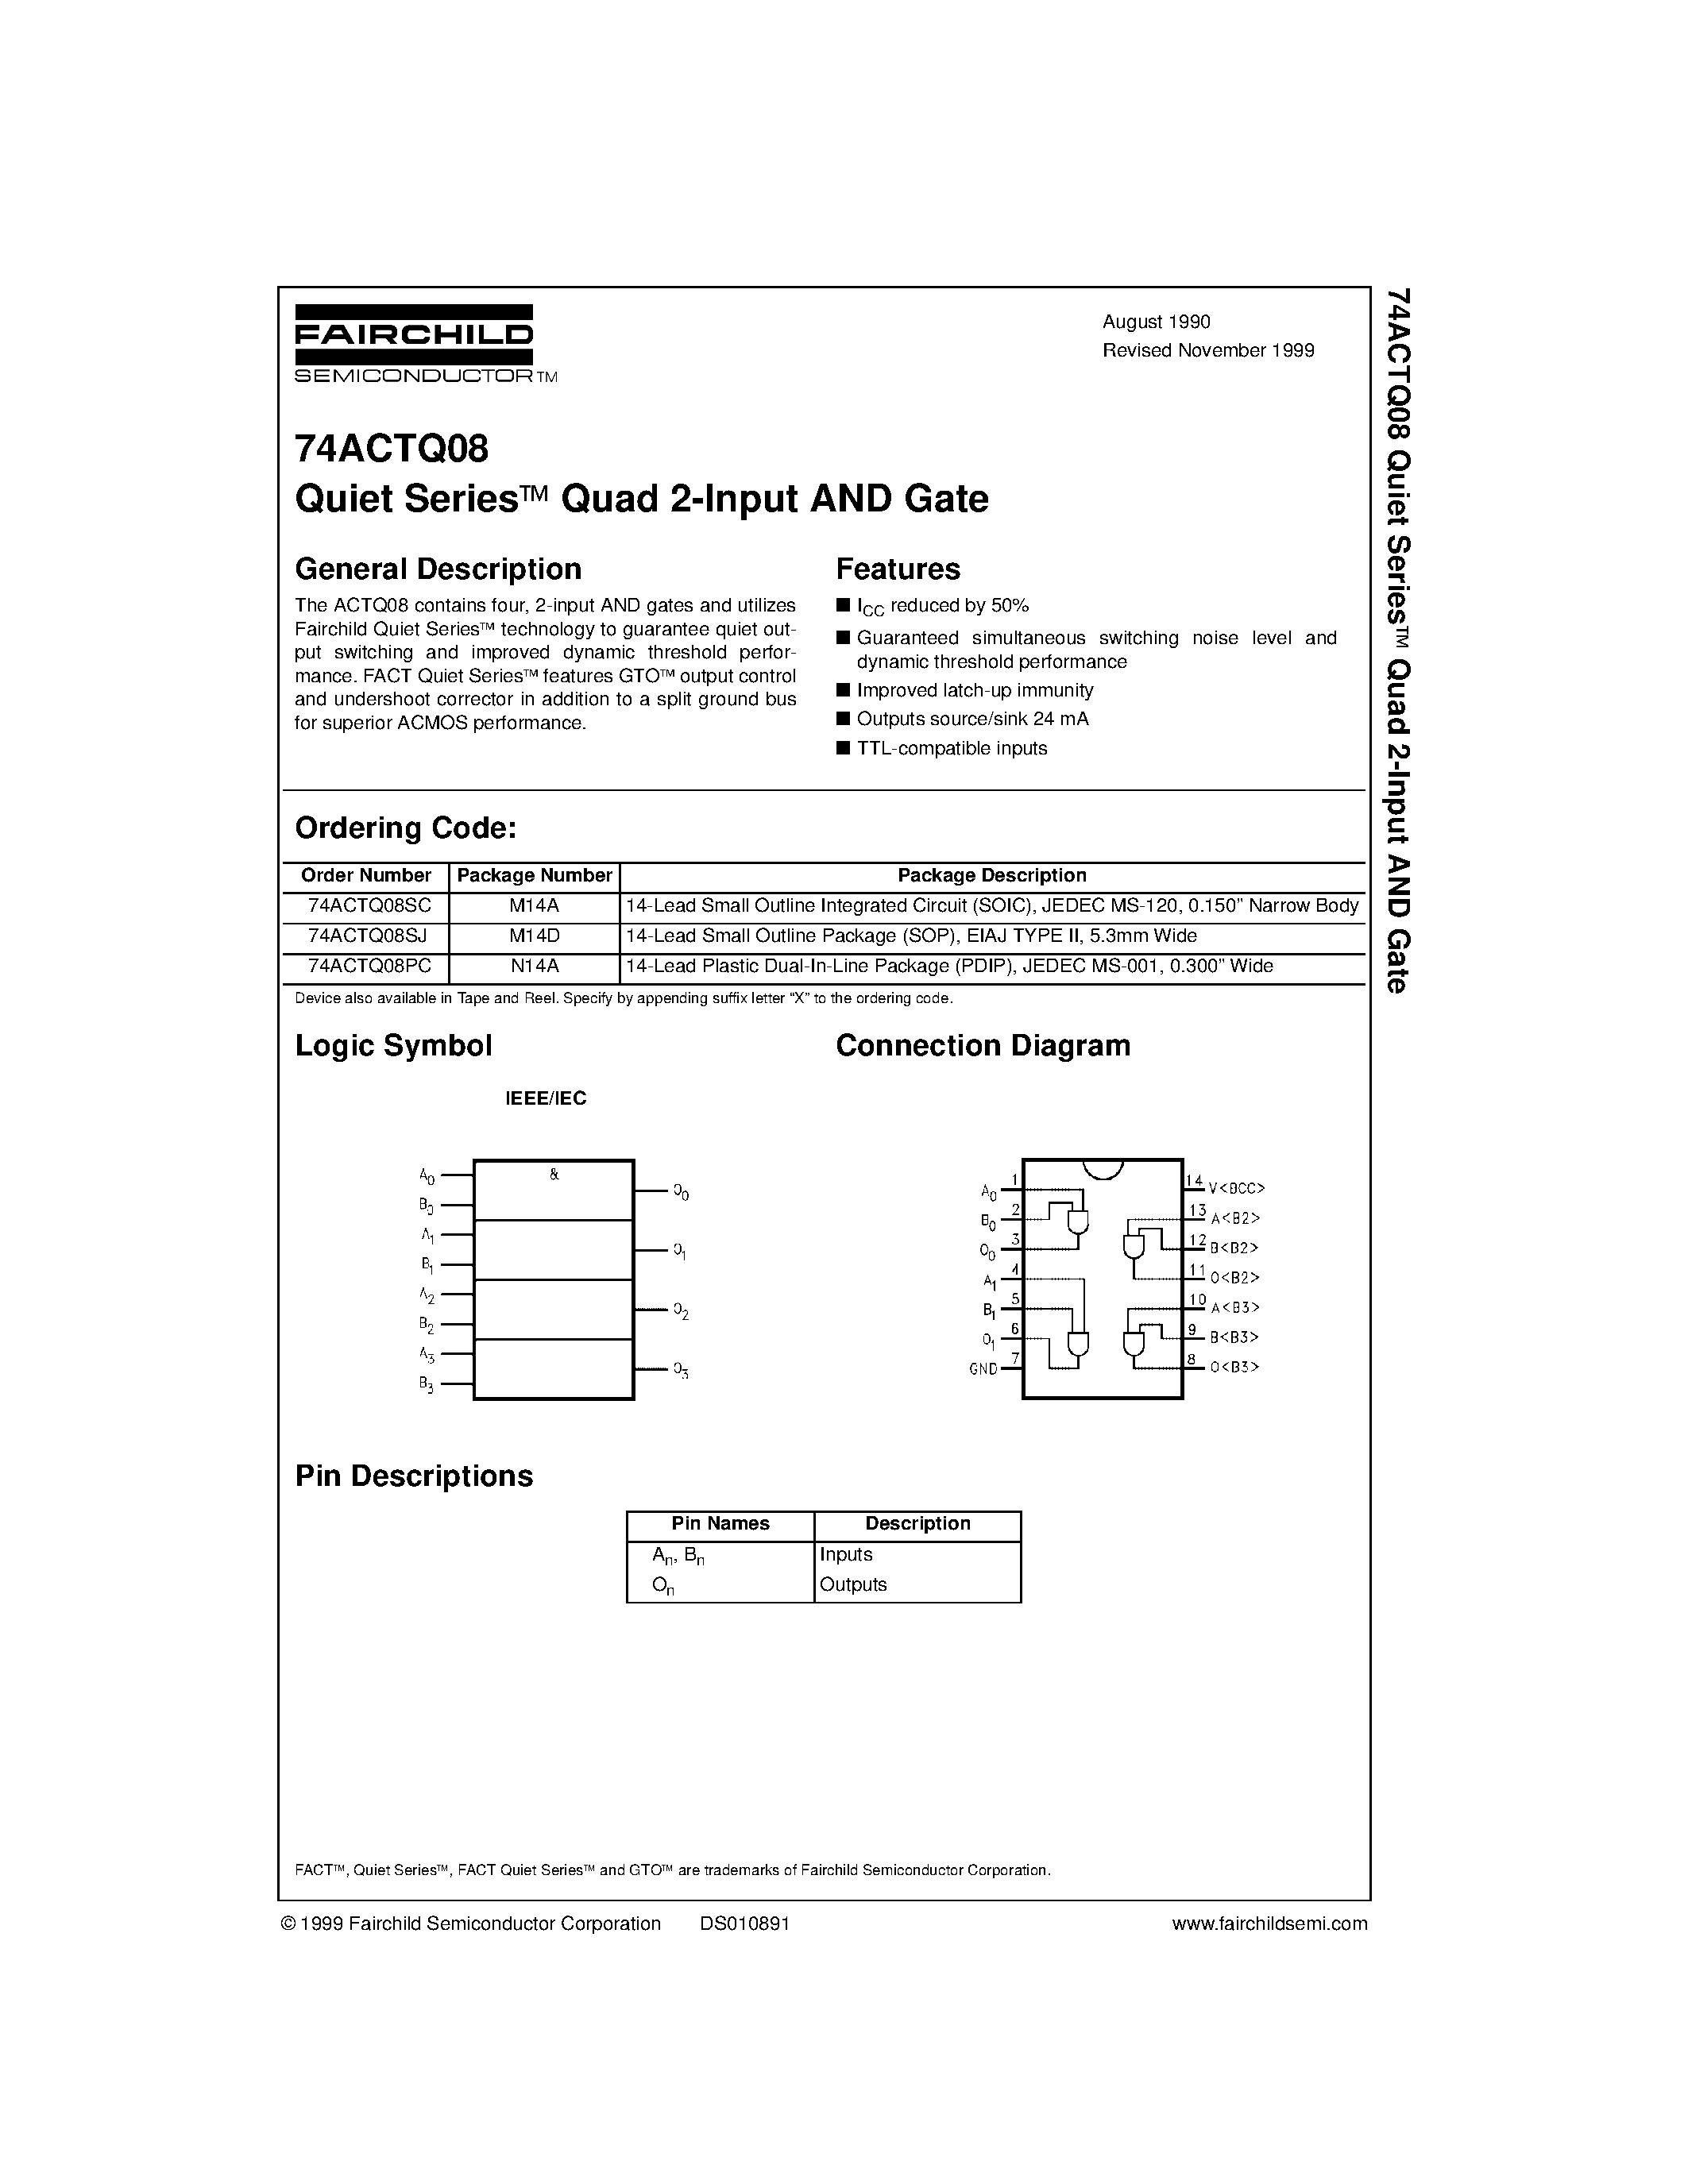 Datasheet 74ACTQ08SJ - Quiet Series Quad 2-Input AND Gate page 1